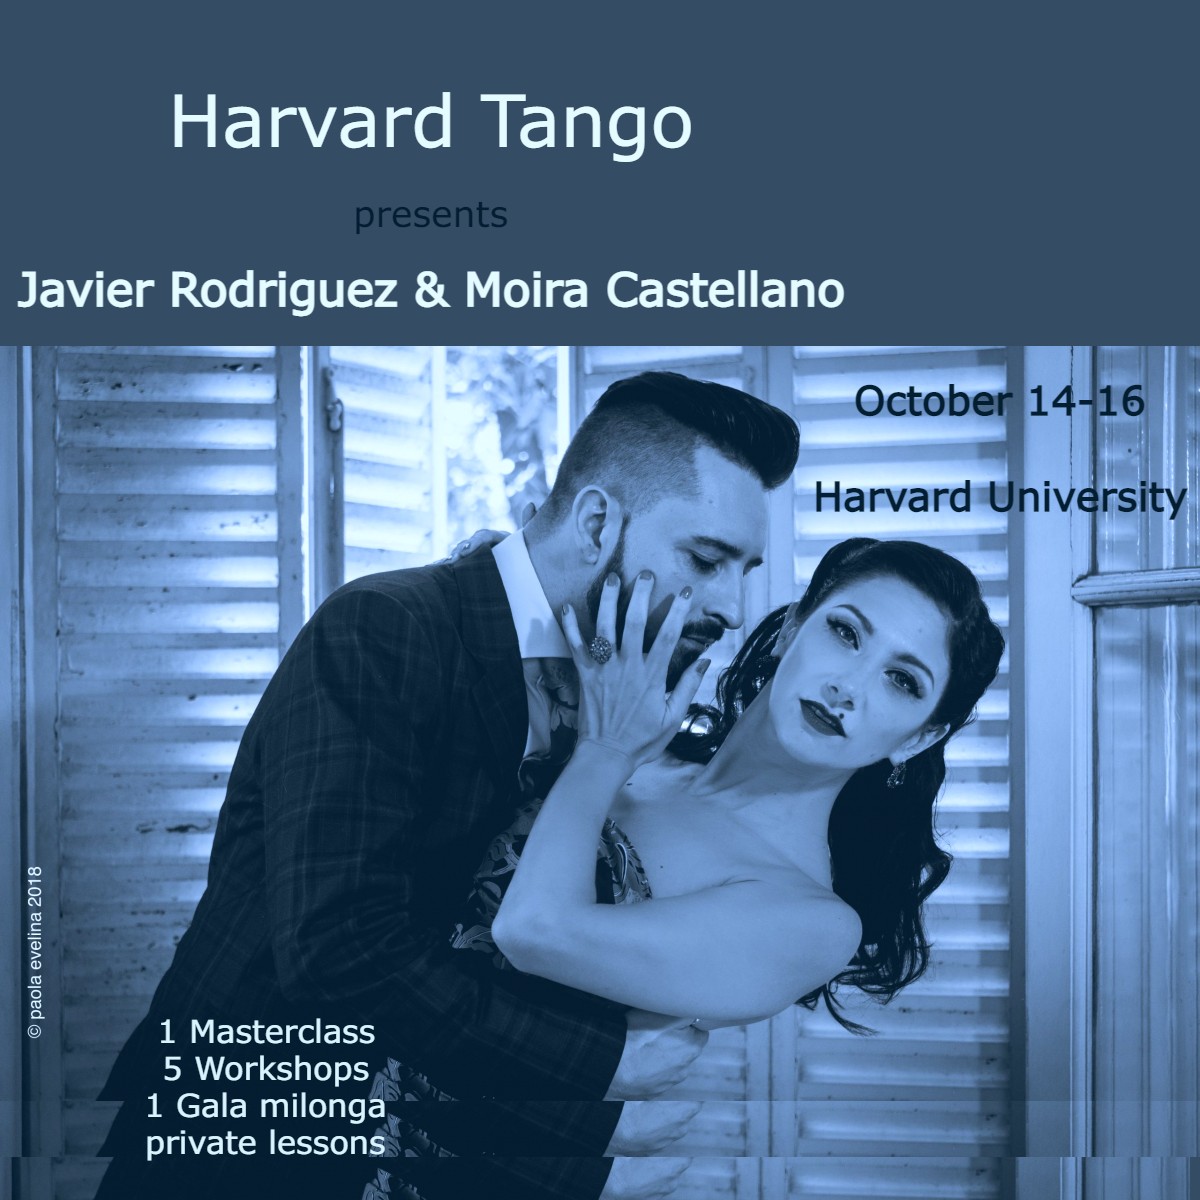 Harvard Tango presents Javier Rodriguez Moira Castellano